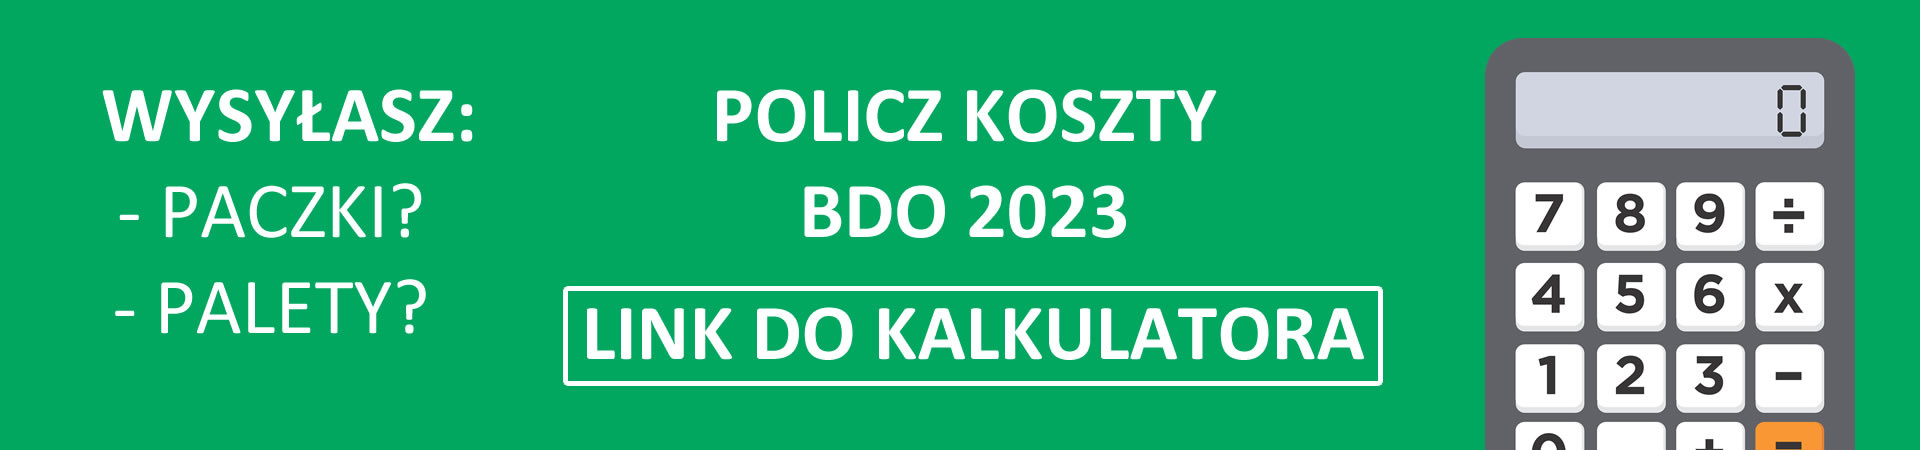 kalkulator-bdo-2023(1)